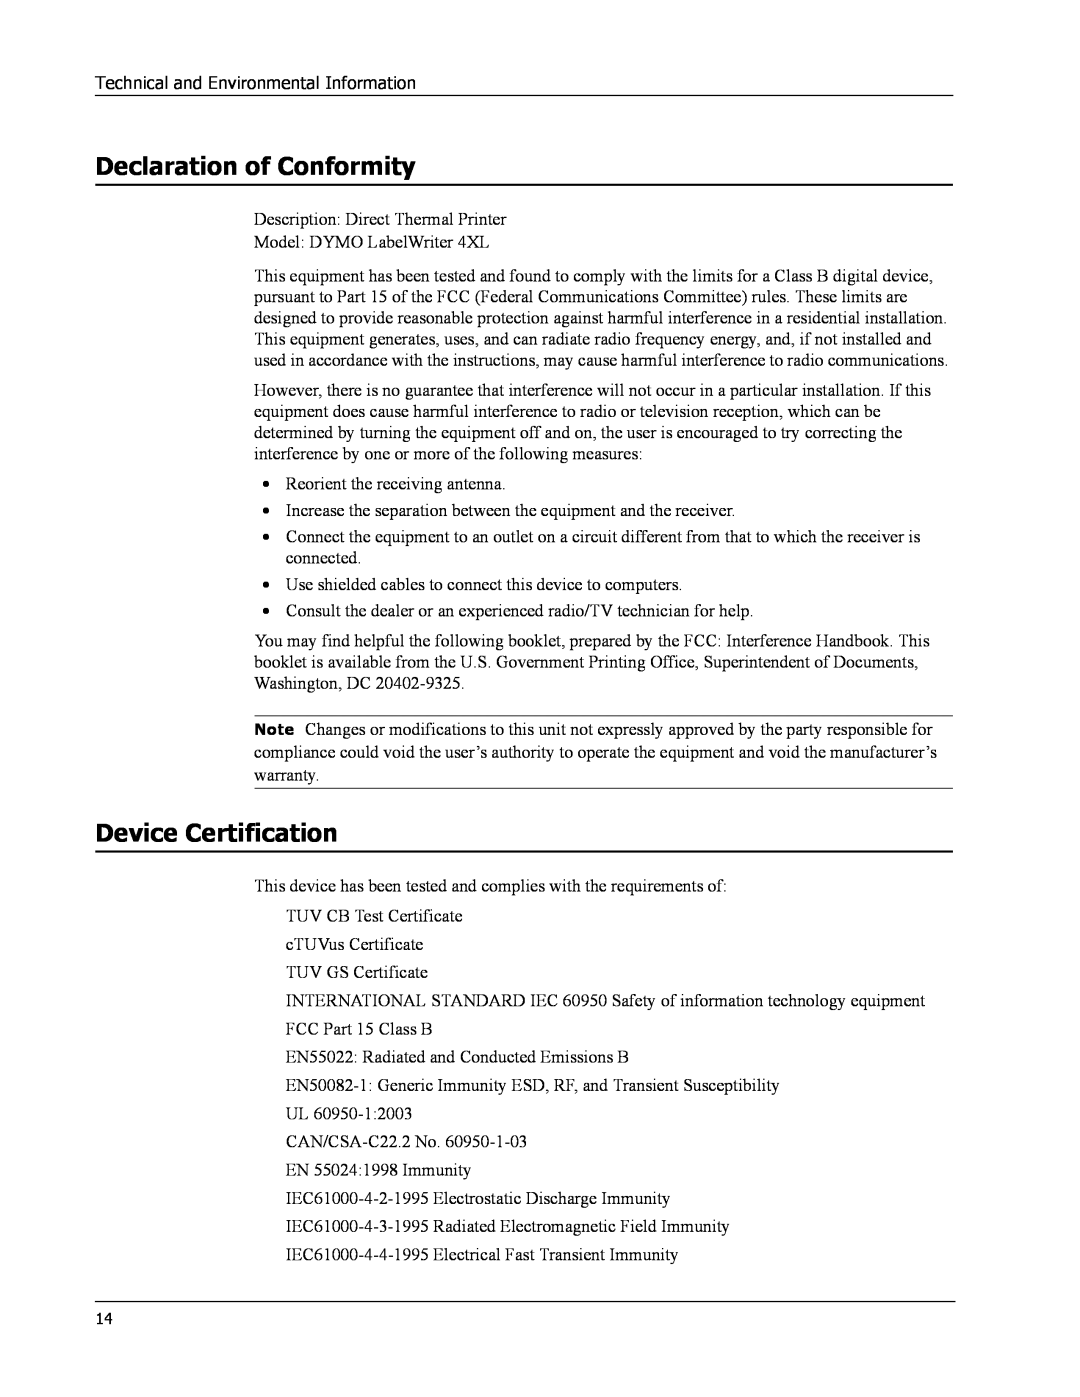 Dymo 4XL manual Declaration of Conformity, Device Certification 